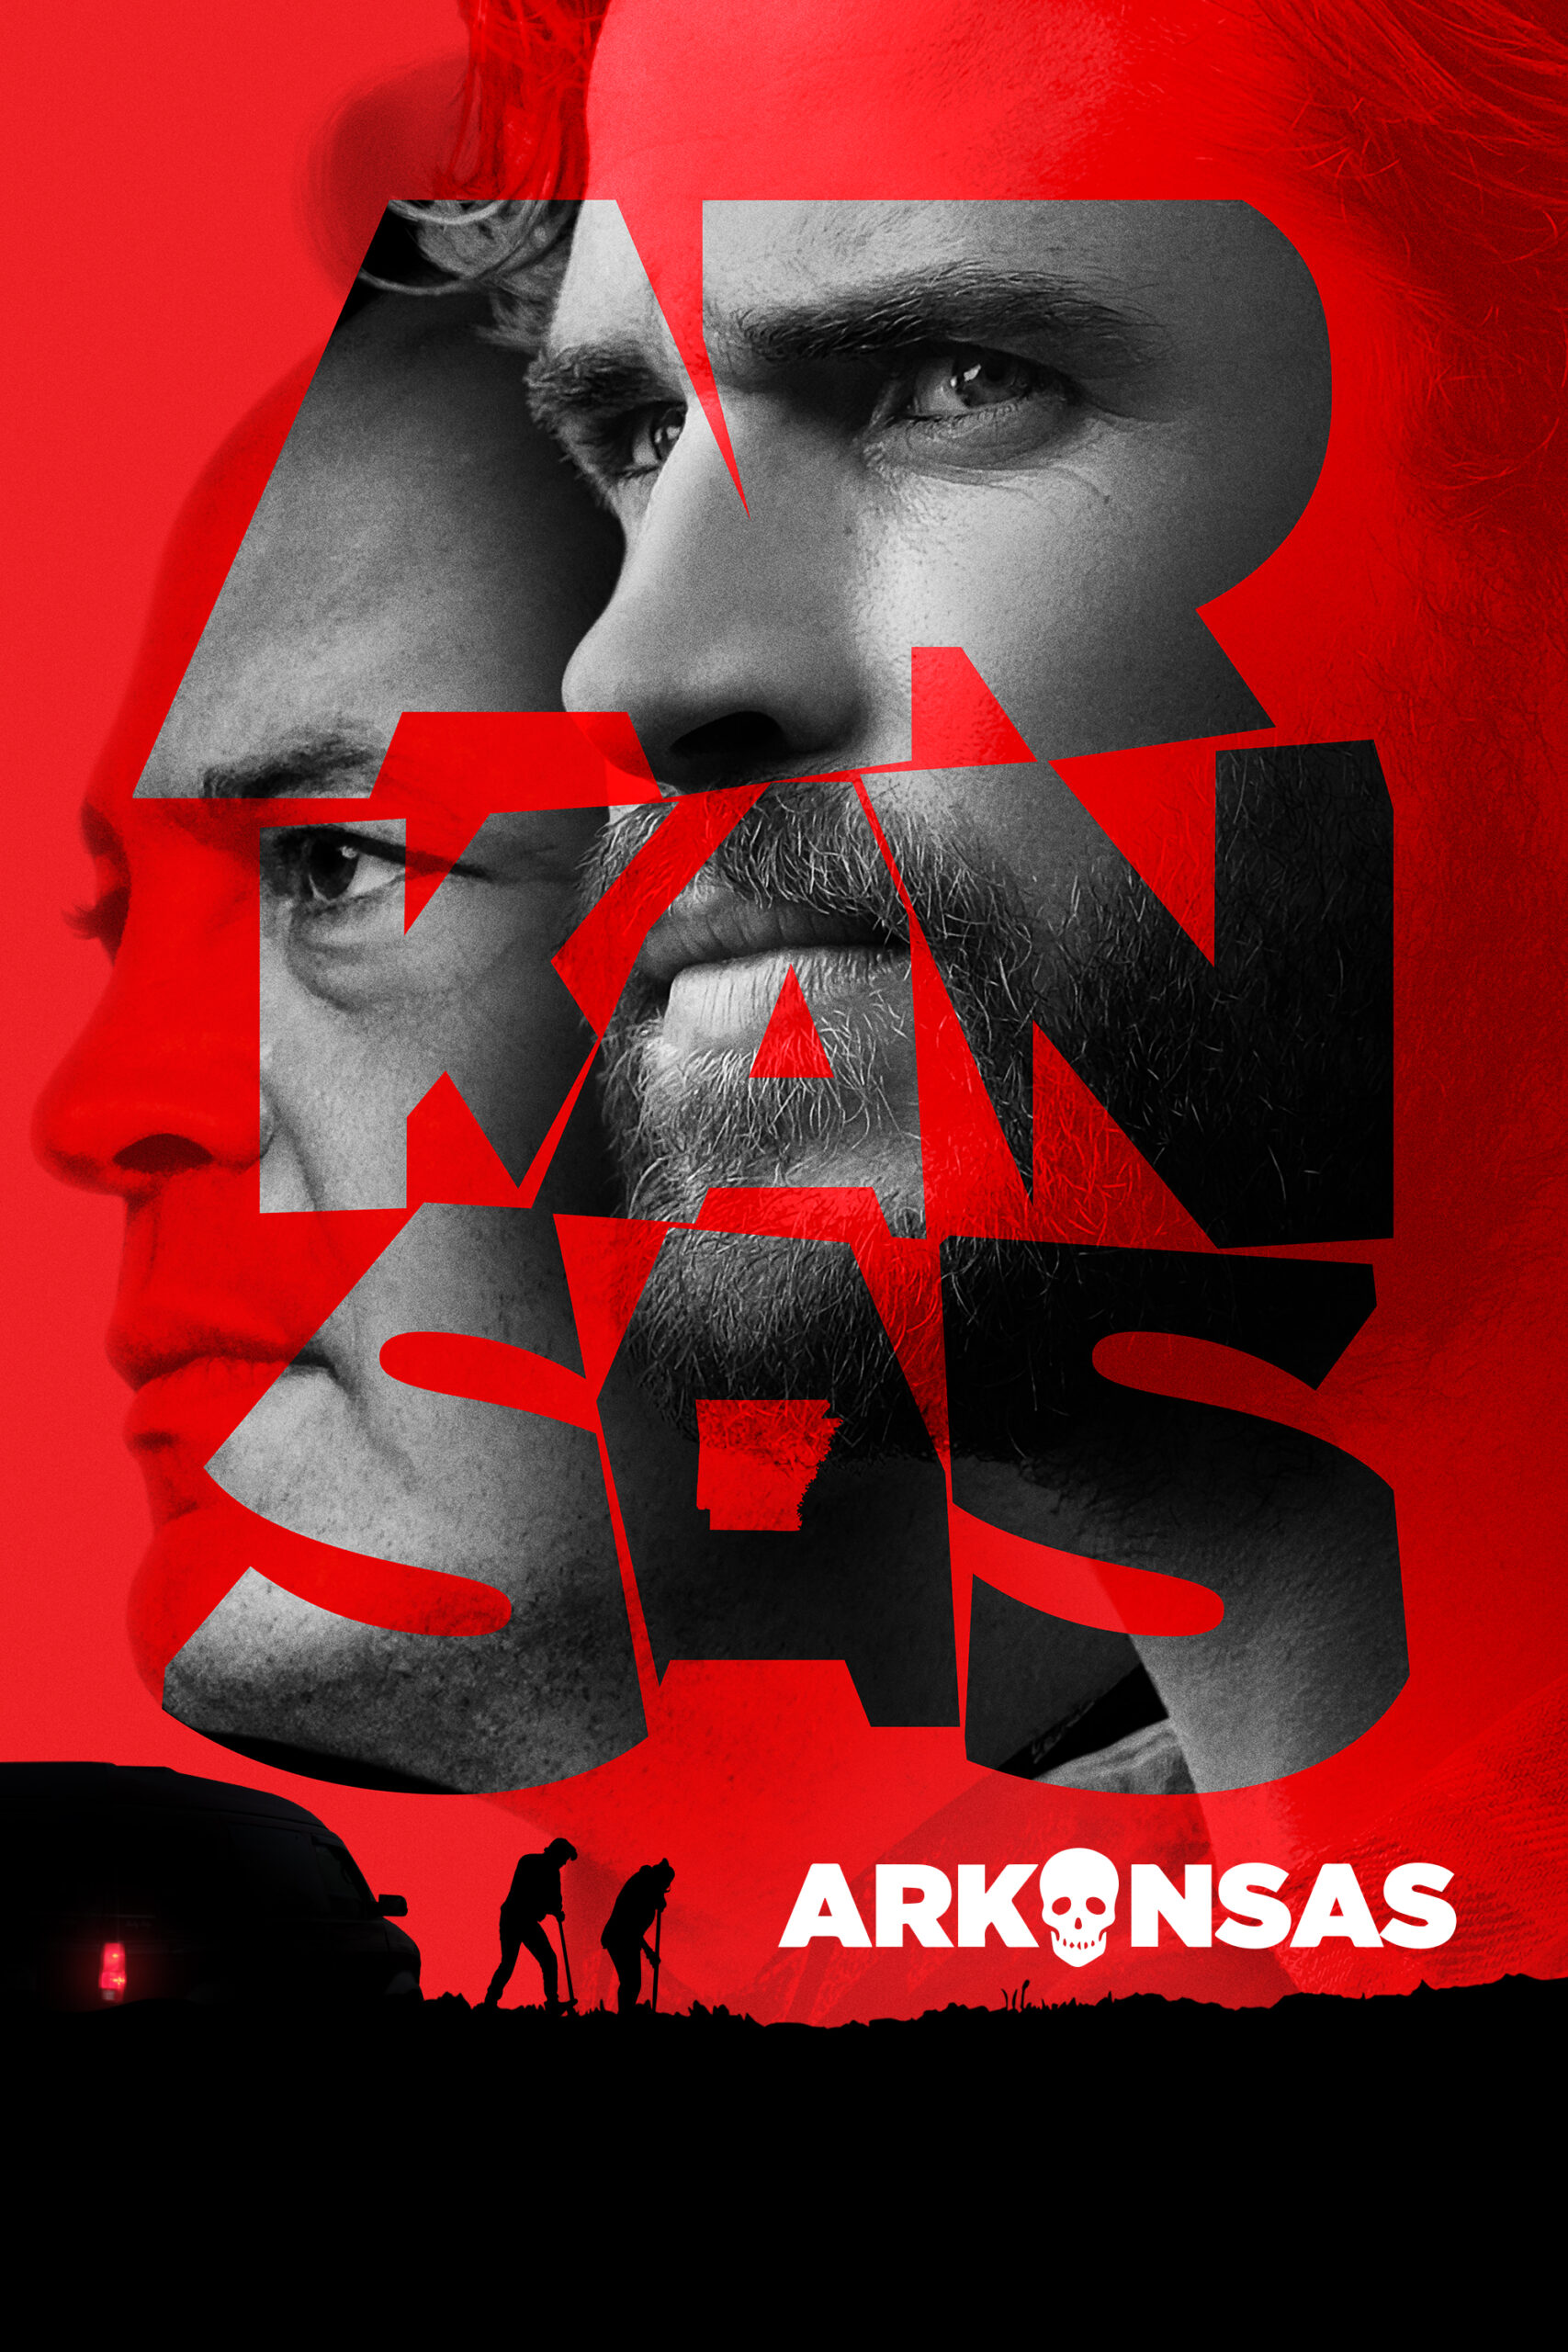 [Movie] Arkansas